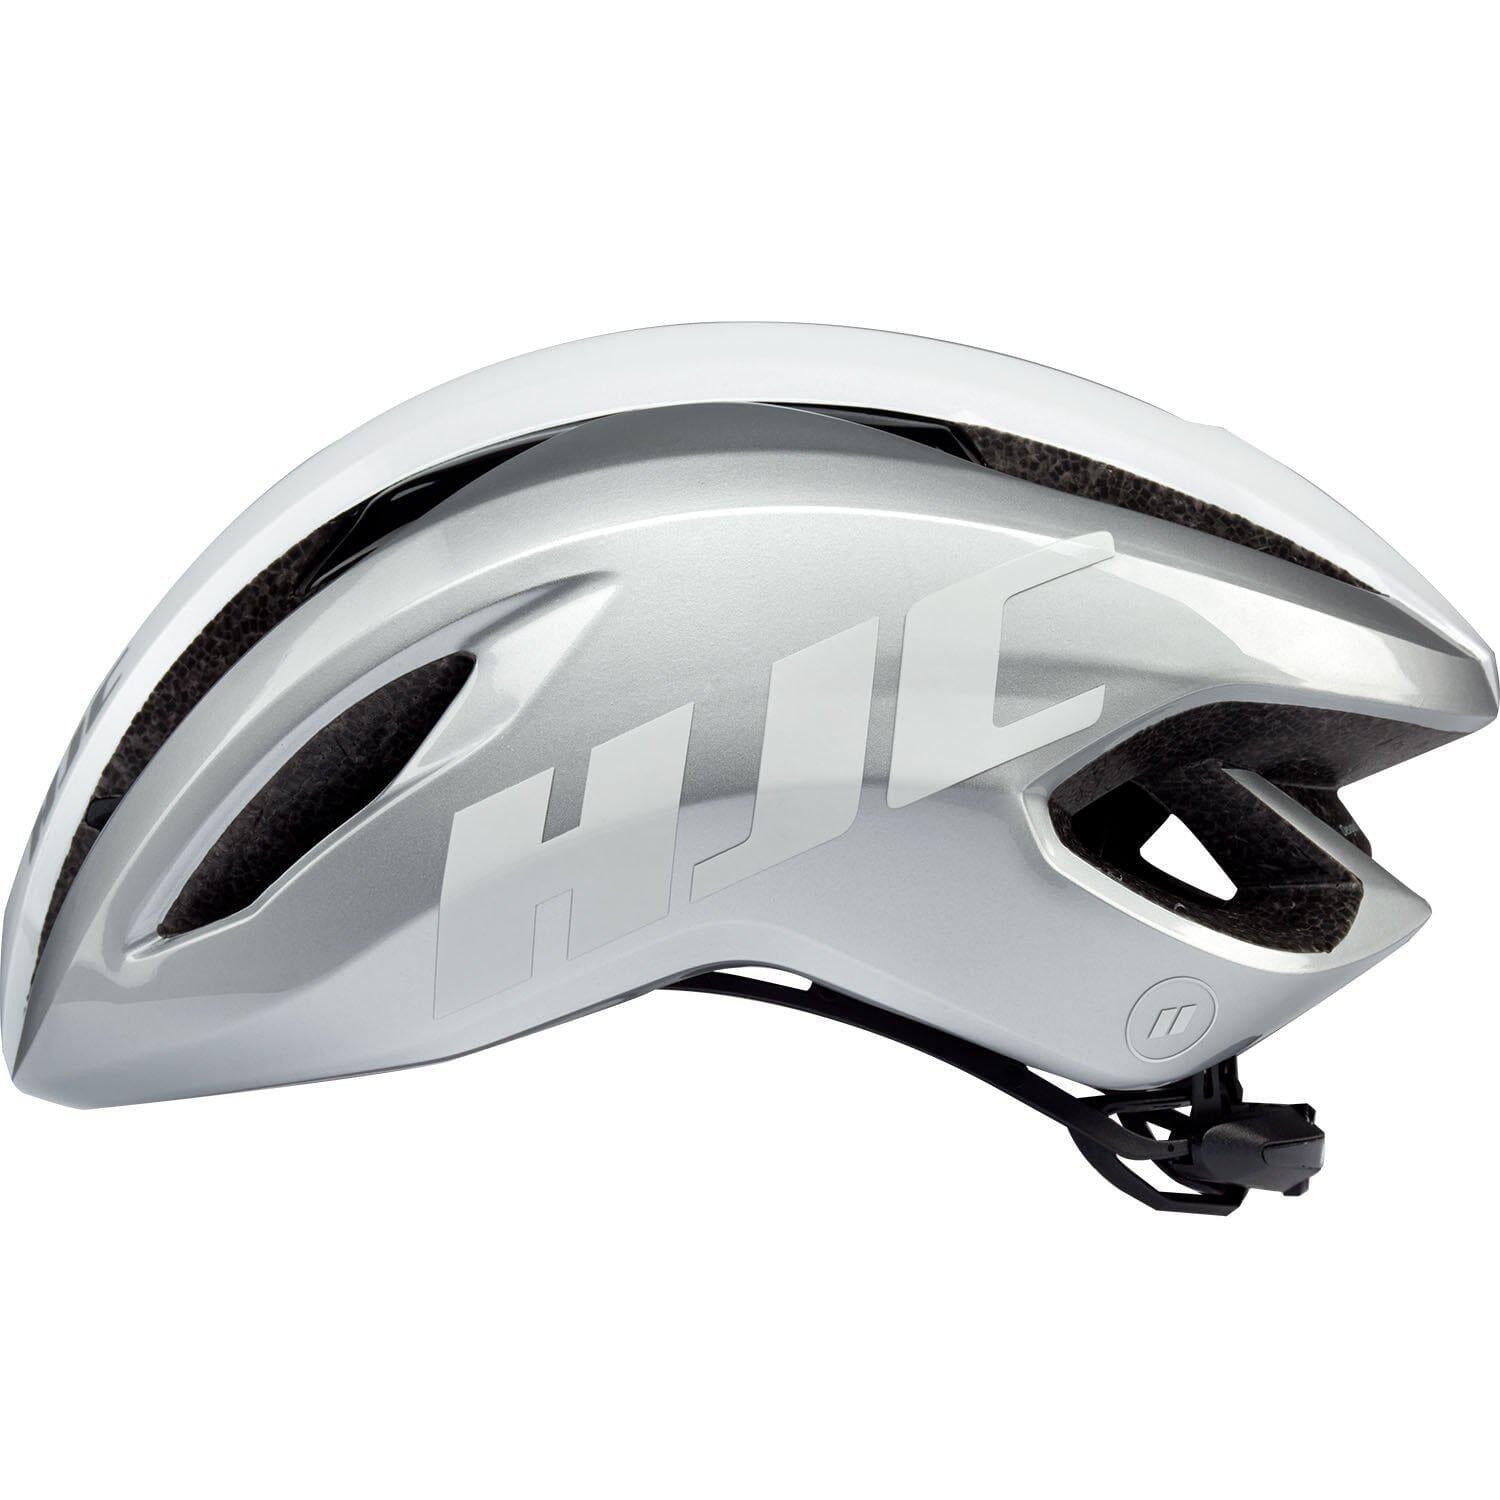 HJC Veleco: Streamlined, Comfy Helmet for Road Cycling 5/5